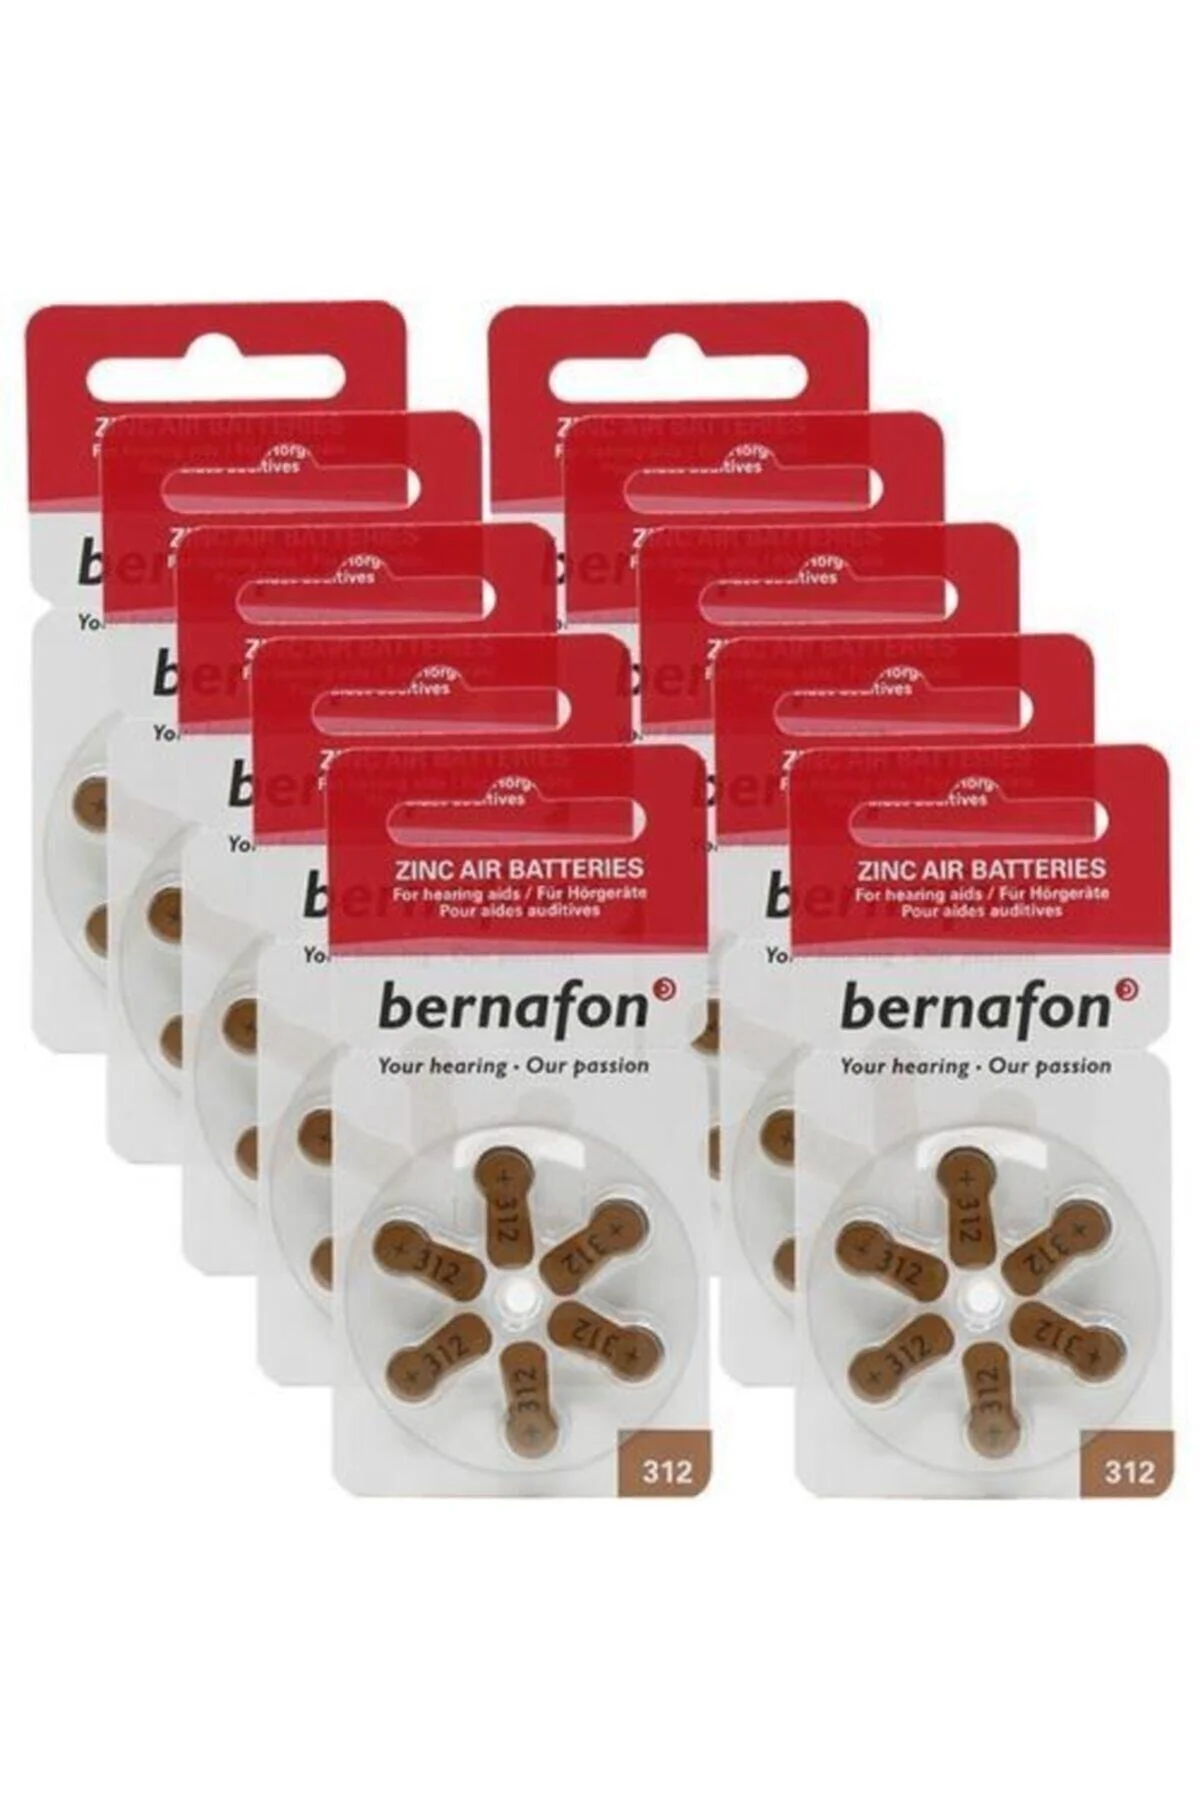 Bernafon Hearing Aid Headphone Battery No:312 (10x6 Set = 60